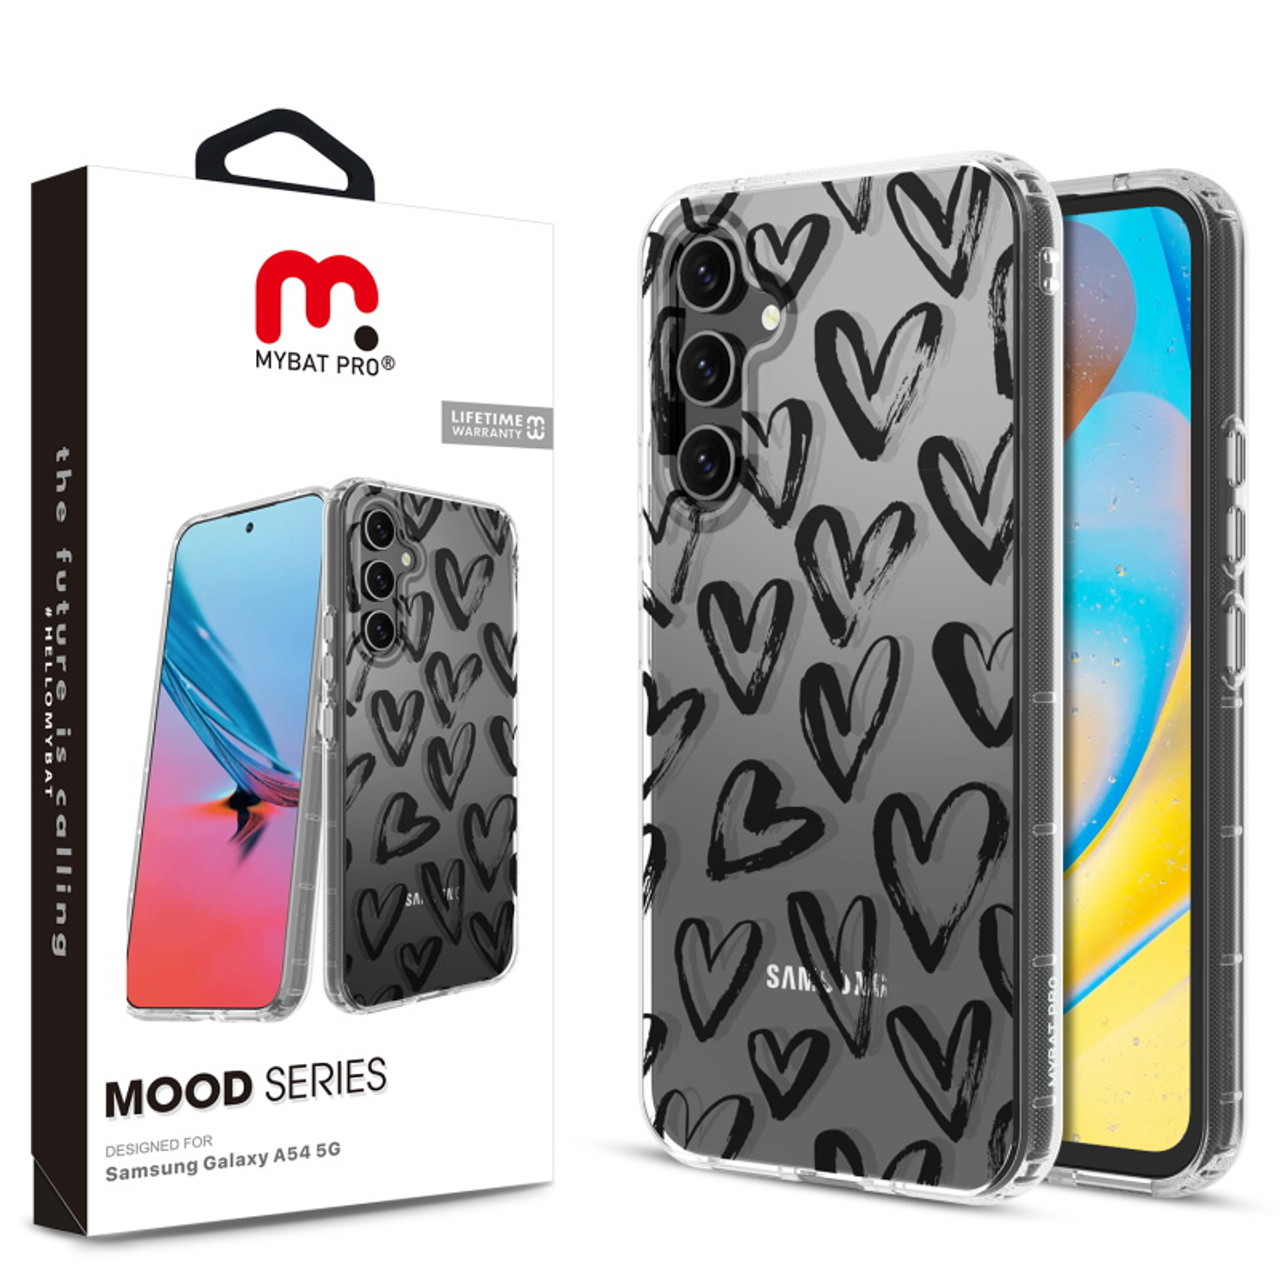 MyBat Pro Mood Series Case for Samsung Galaxy A54 5G - Black Hearts